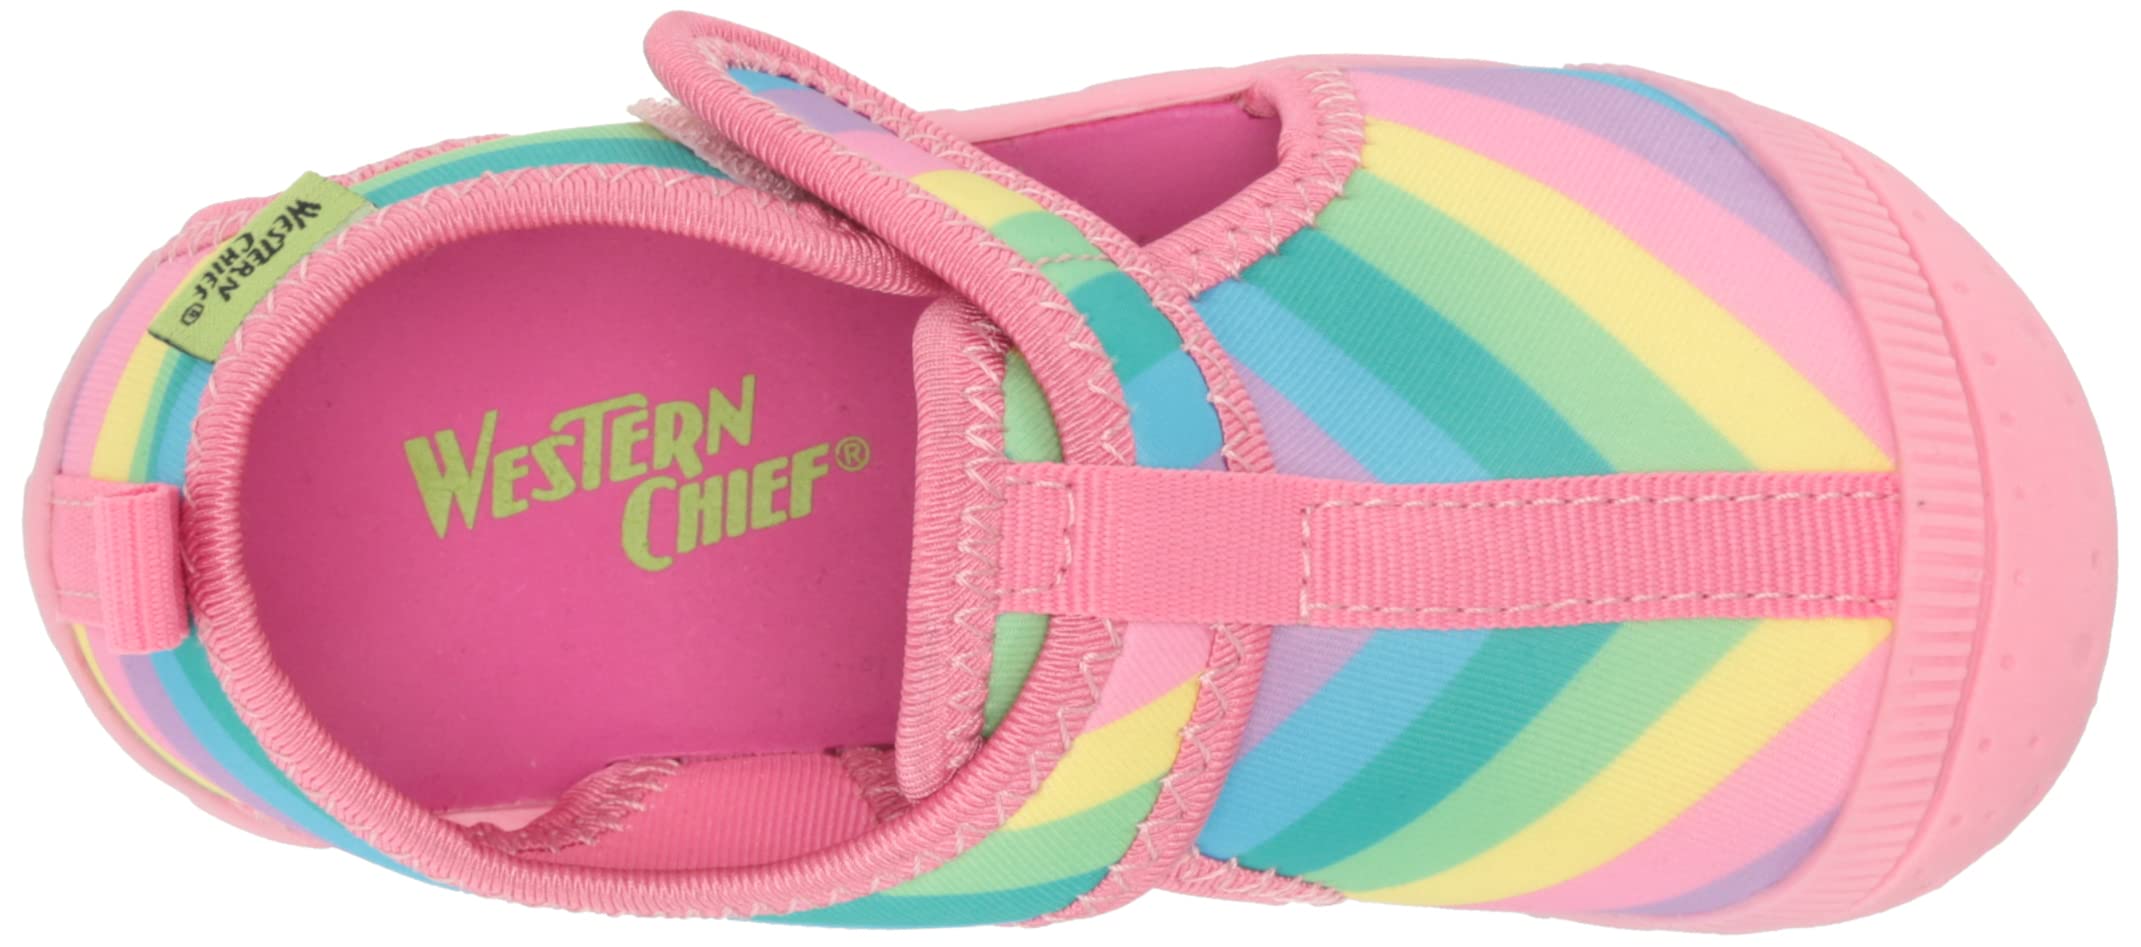 Western Chief Unisex-Child Beachgoer Neoprene Sandal Sport